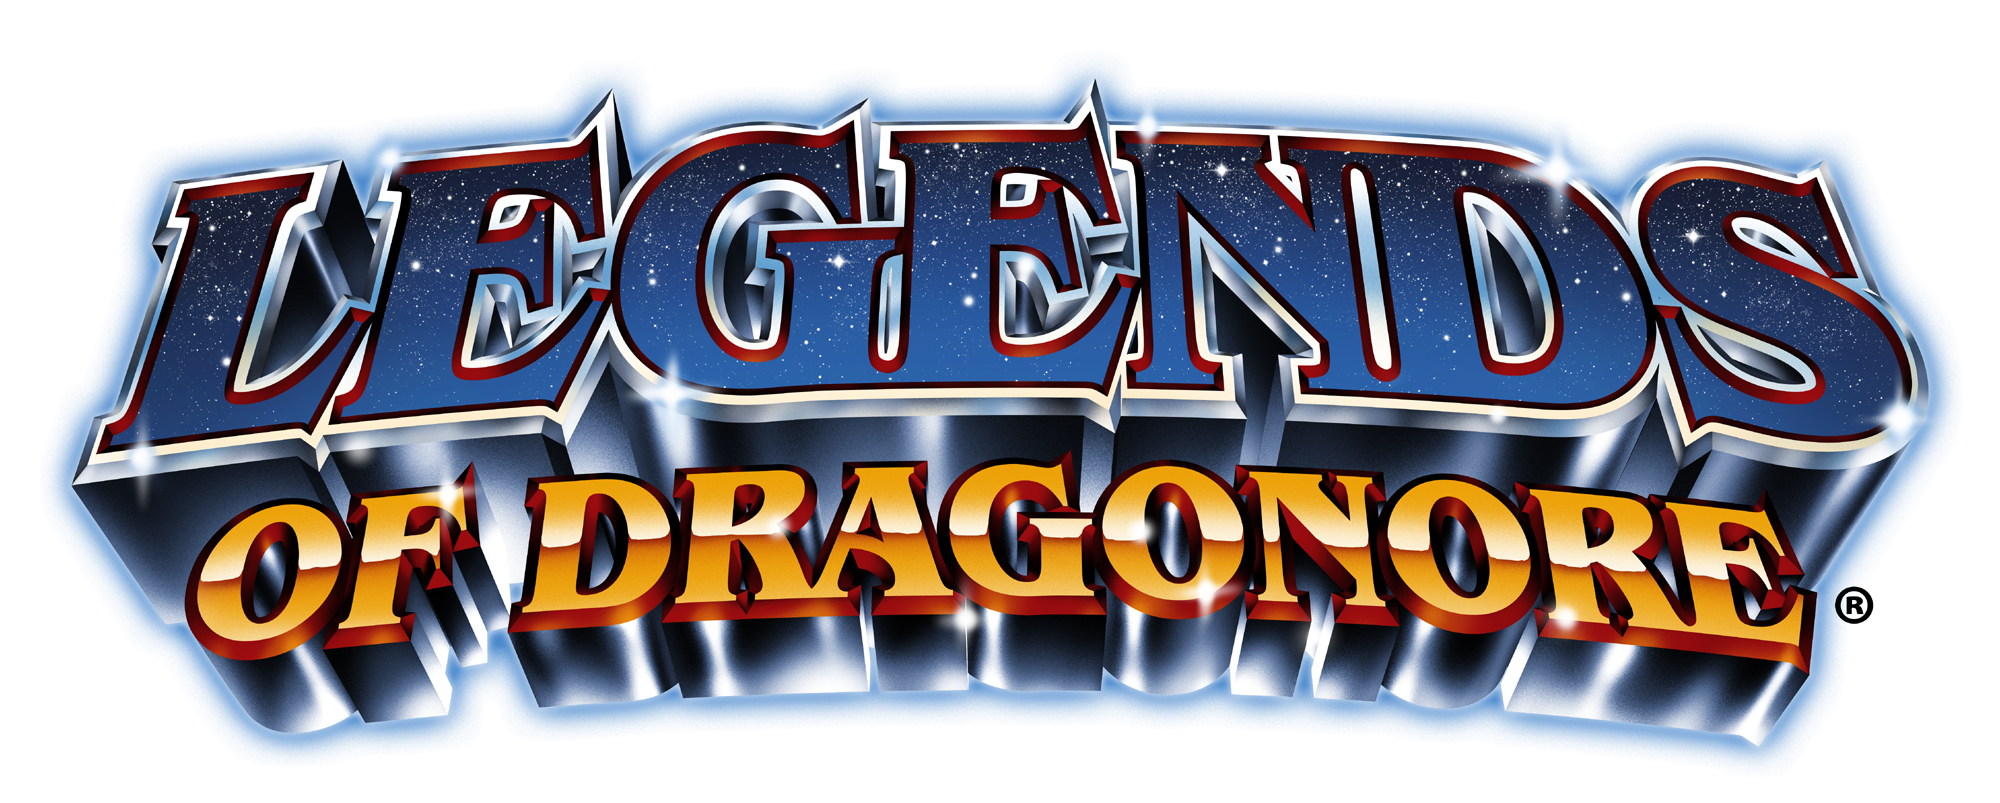 Legends of Dragonore logo finalR